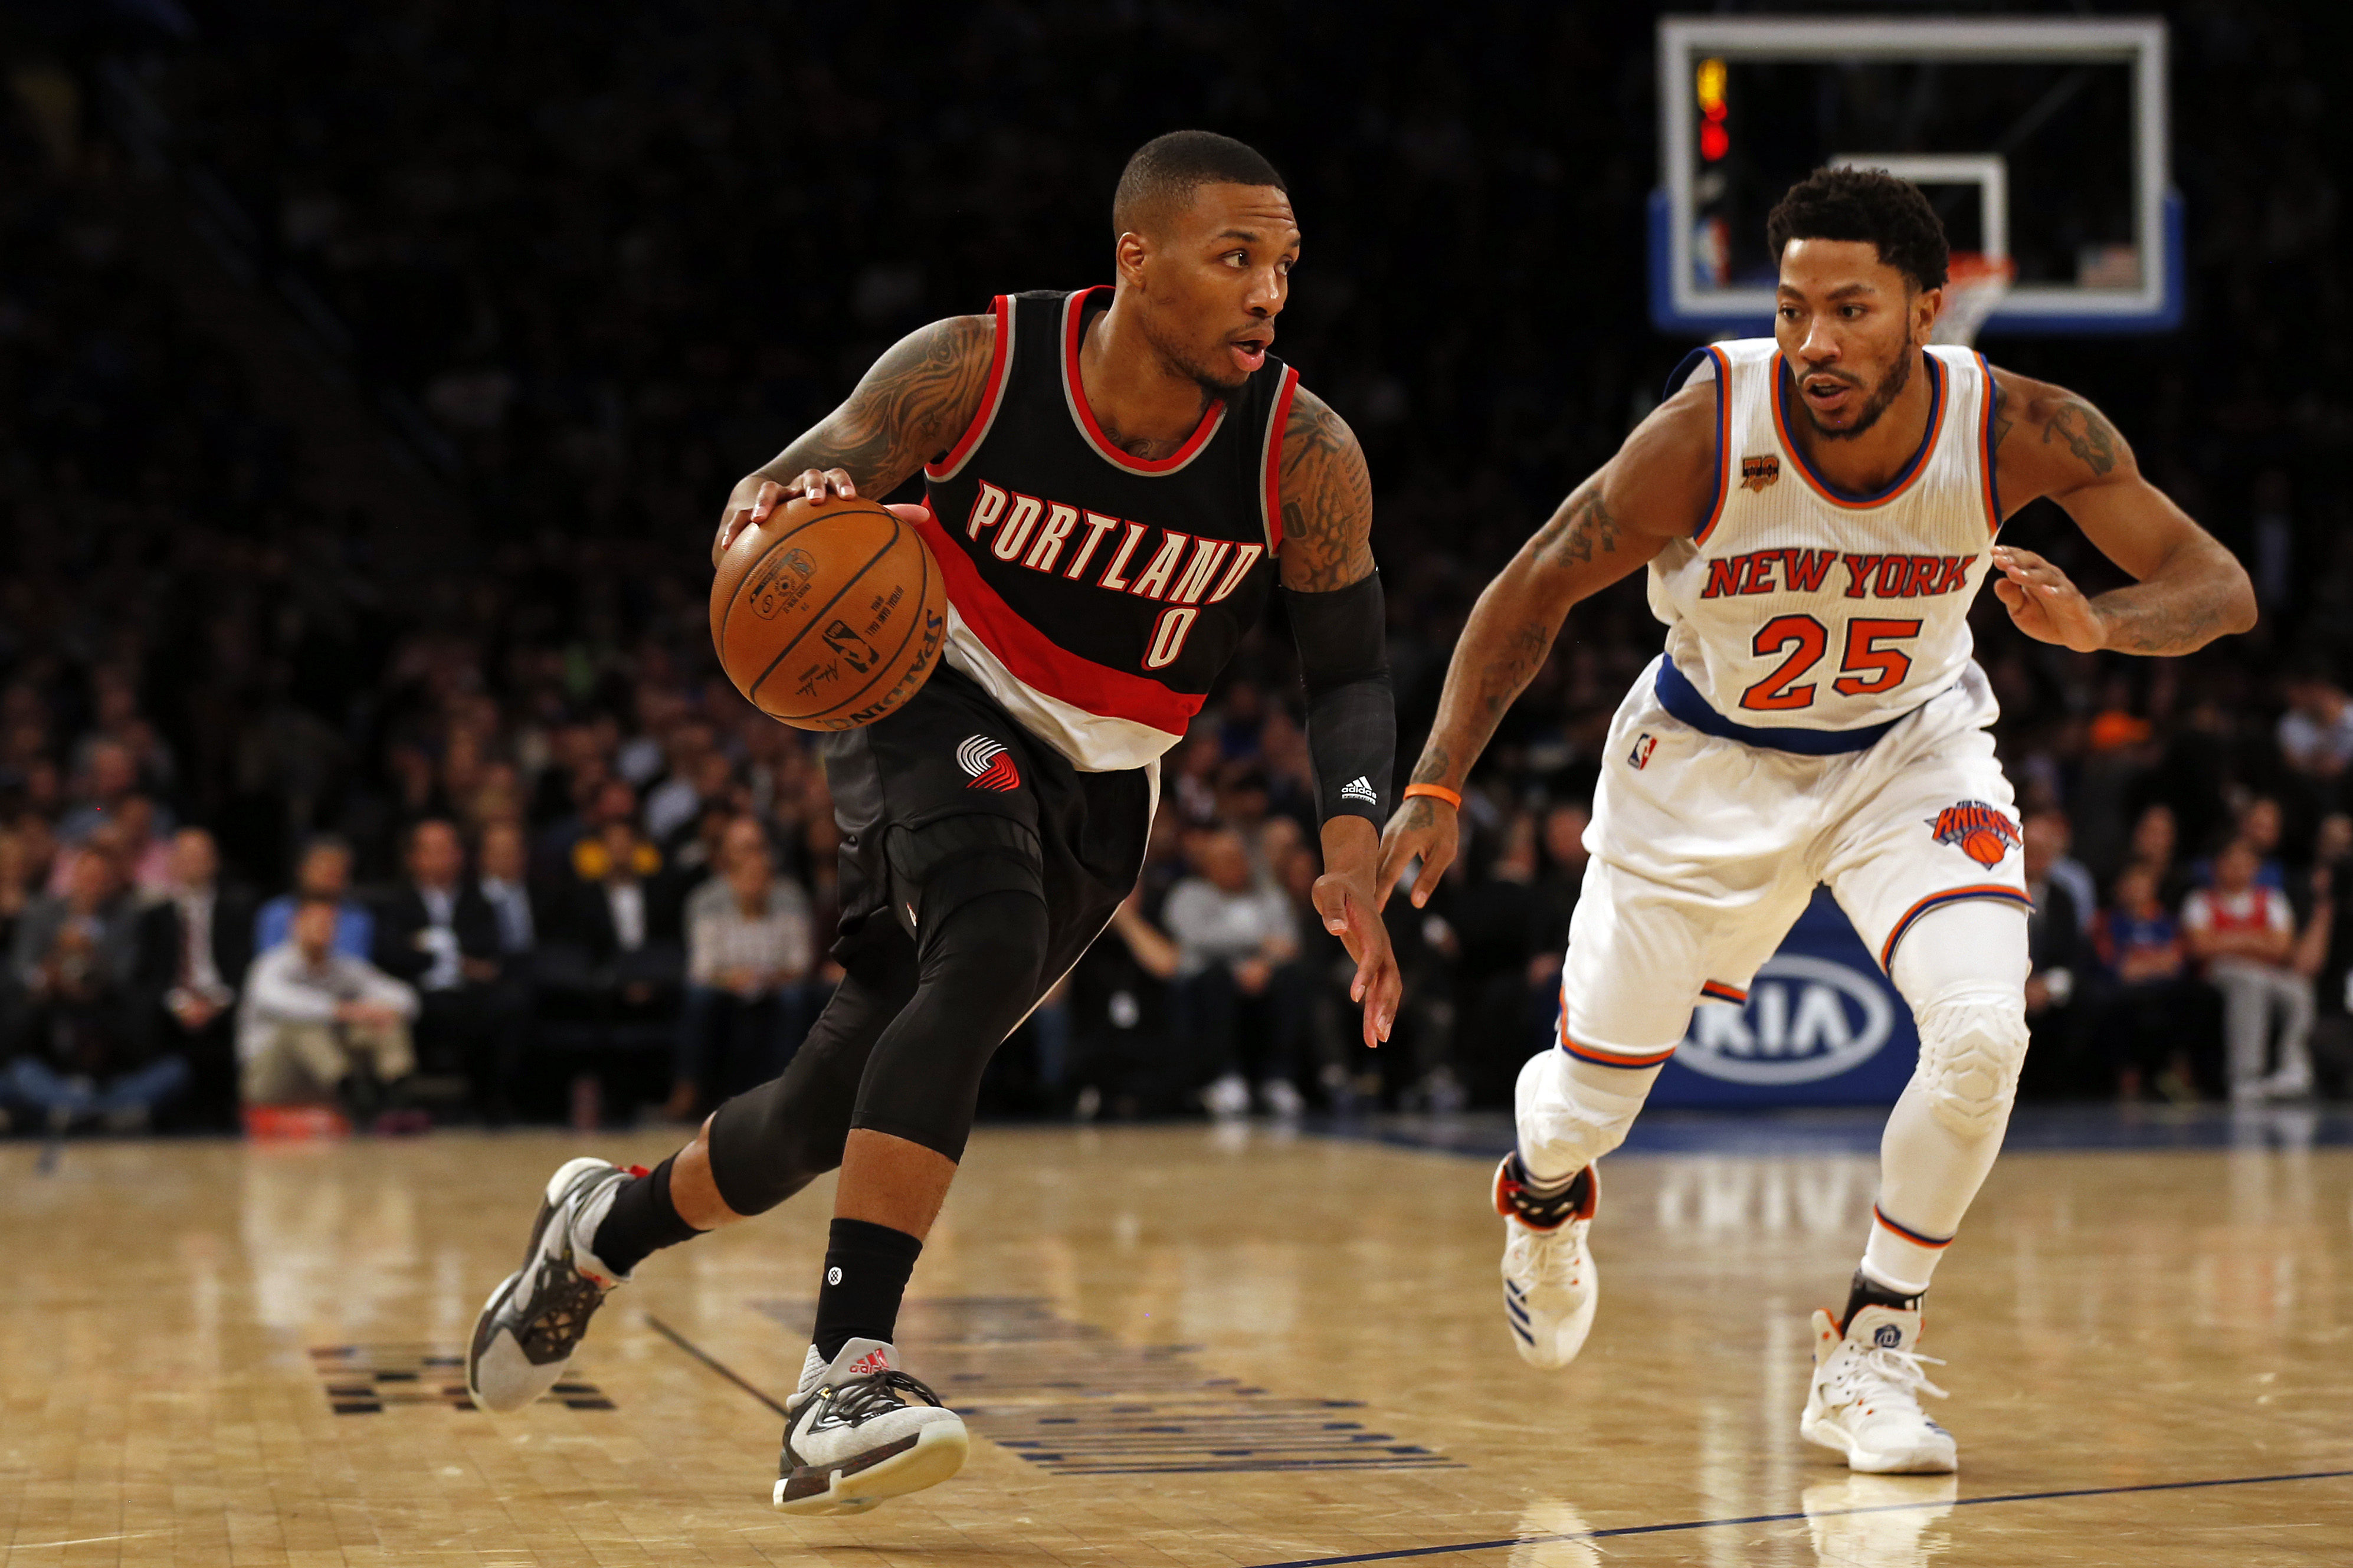 New York Knicks vs Portland Trail Blazers Live Stream: Watch NBA Online